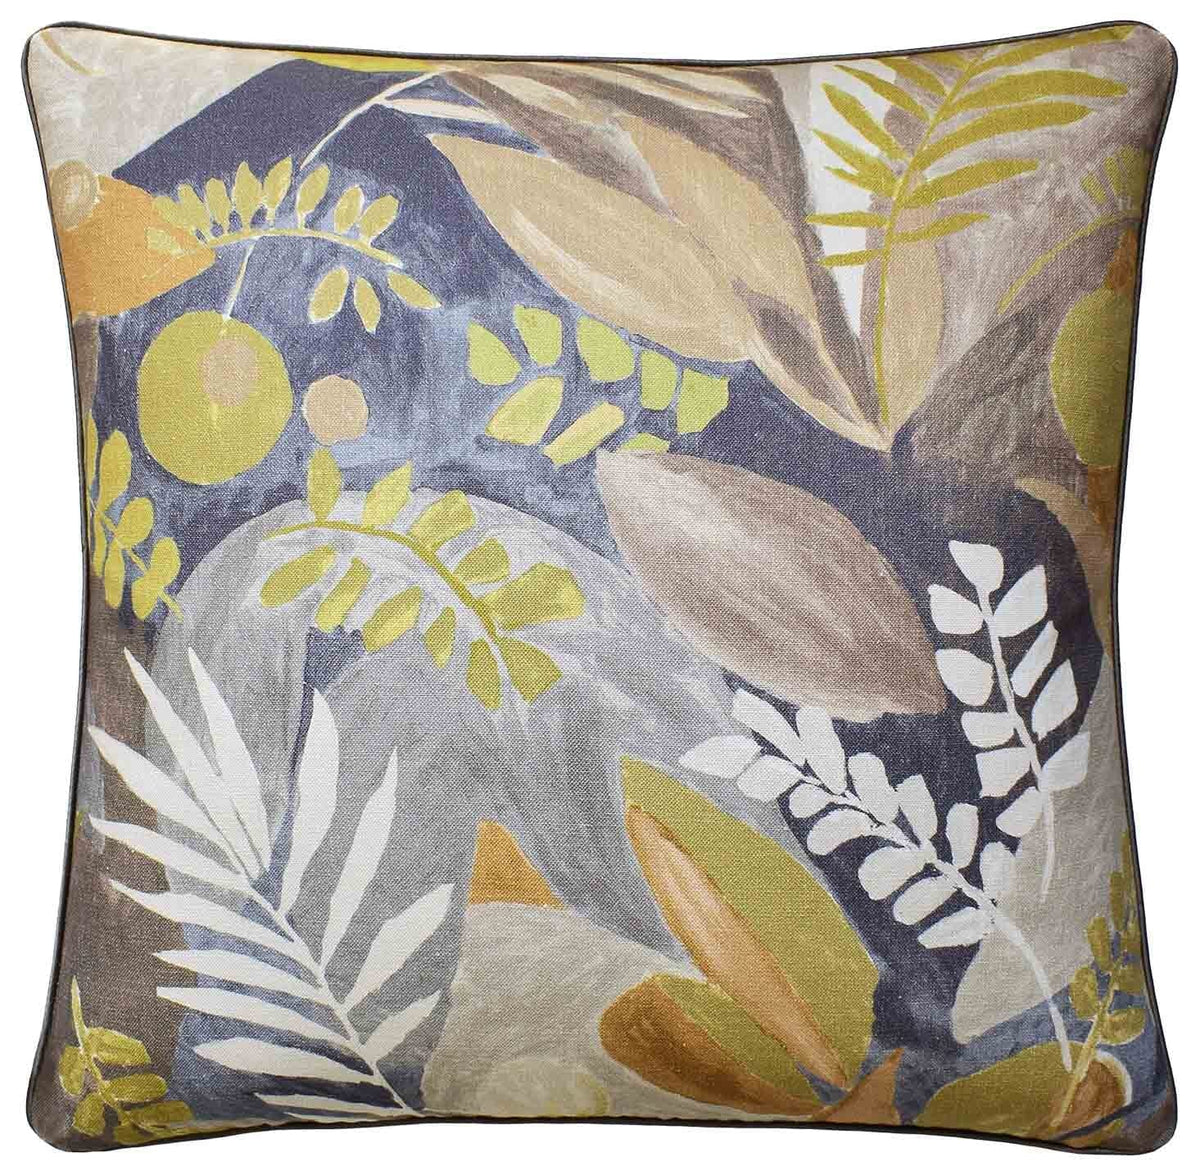 Growing Garden Earth Decorative Pillow - Throw Pillow by Ryan Studio - Covington Fabrics